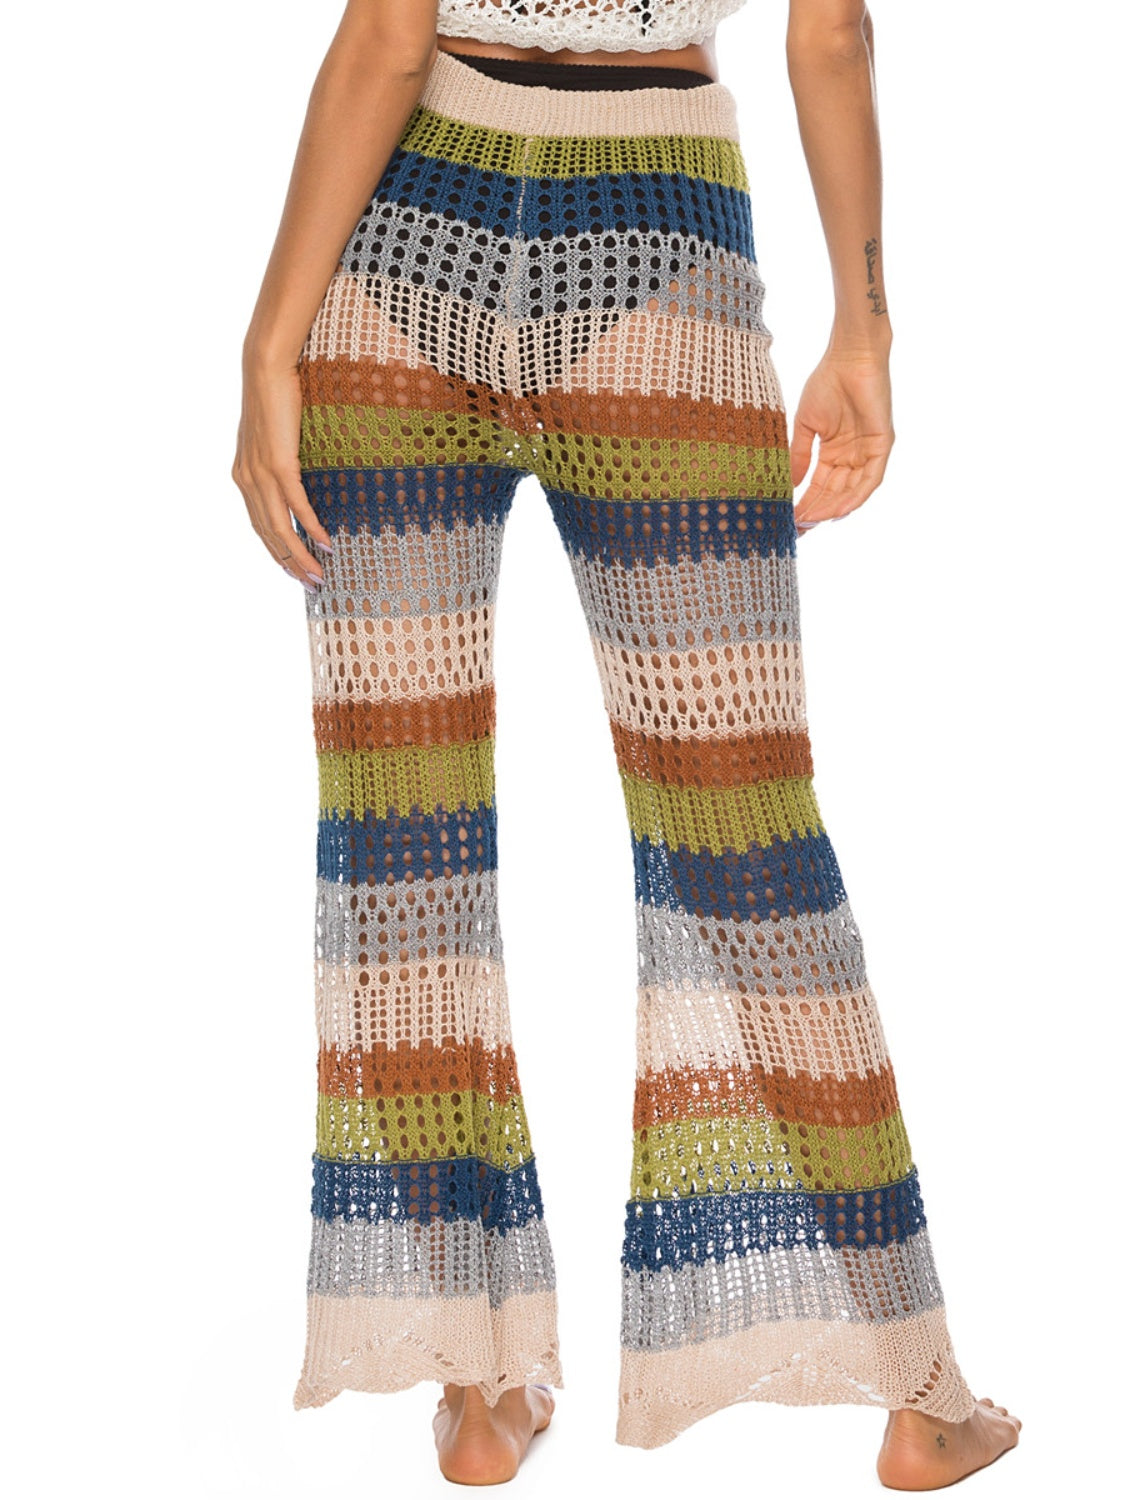 TEEK - Multicolored Drawstring Knitted Contrast Swim Pants SWIMWEAR TEEK Trend   